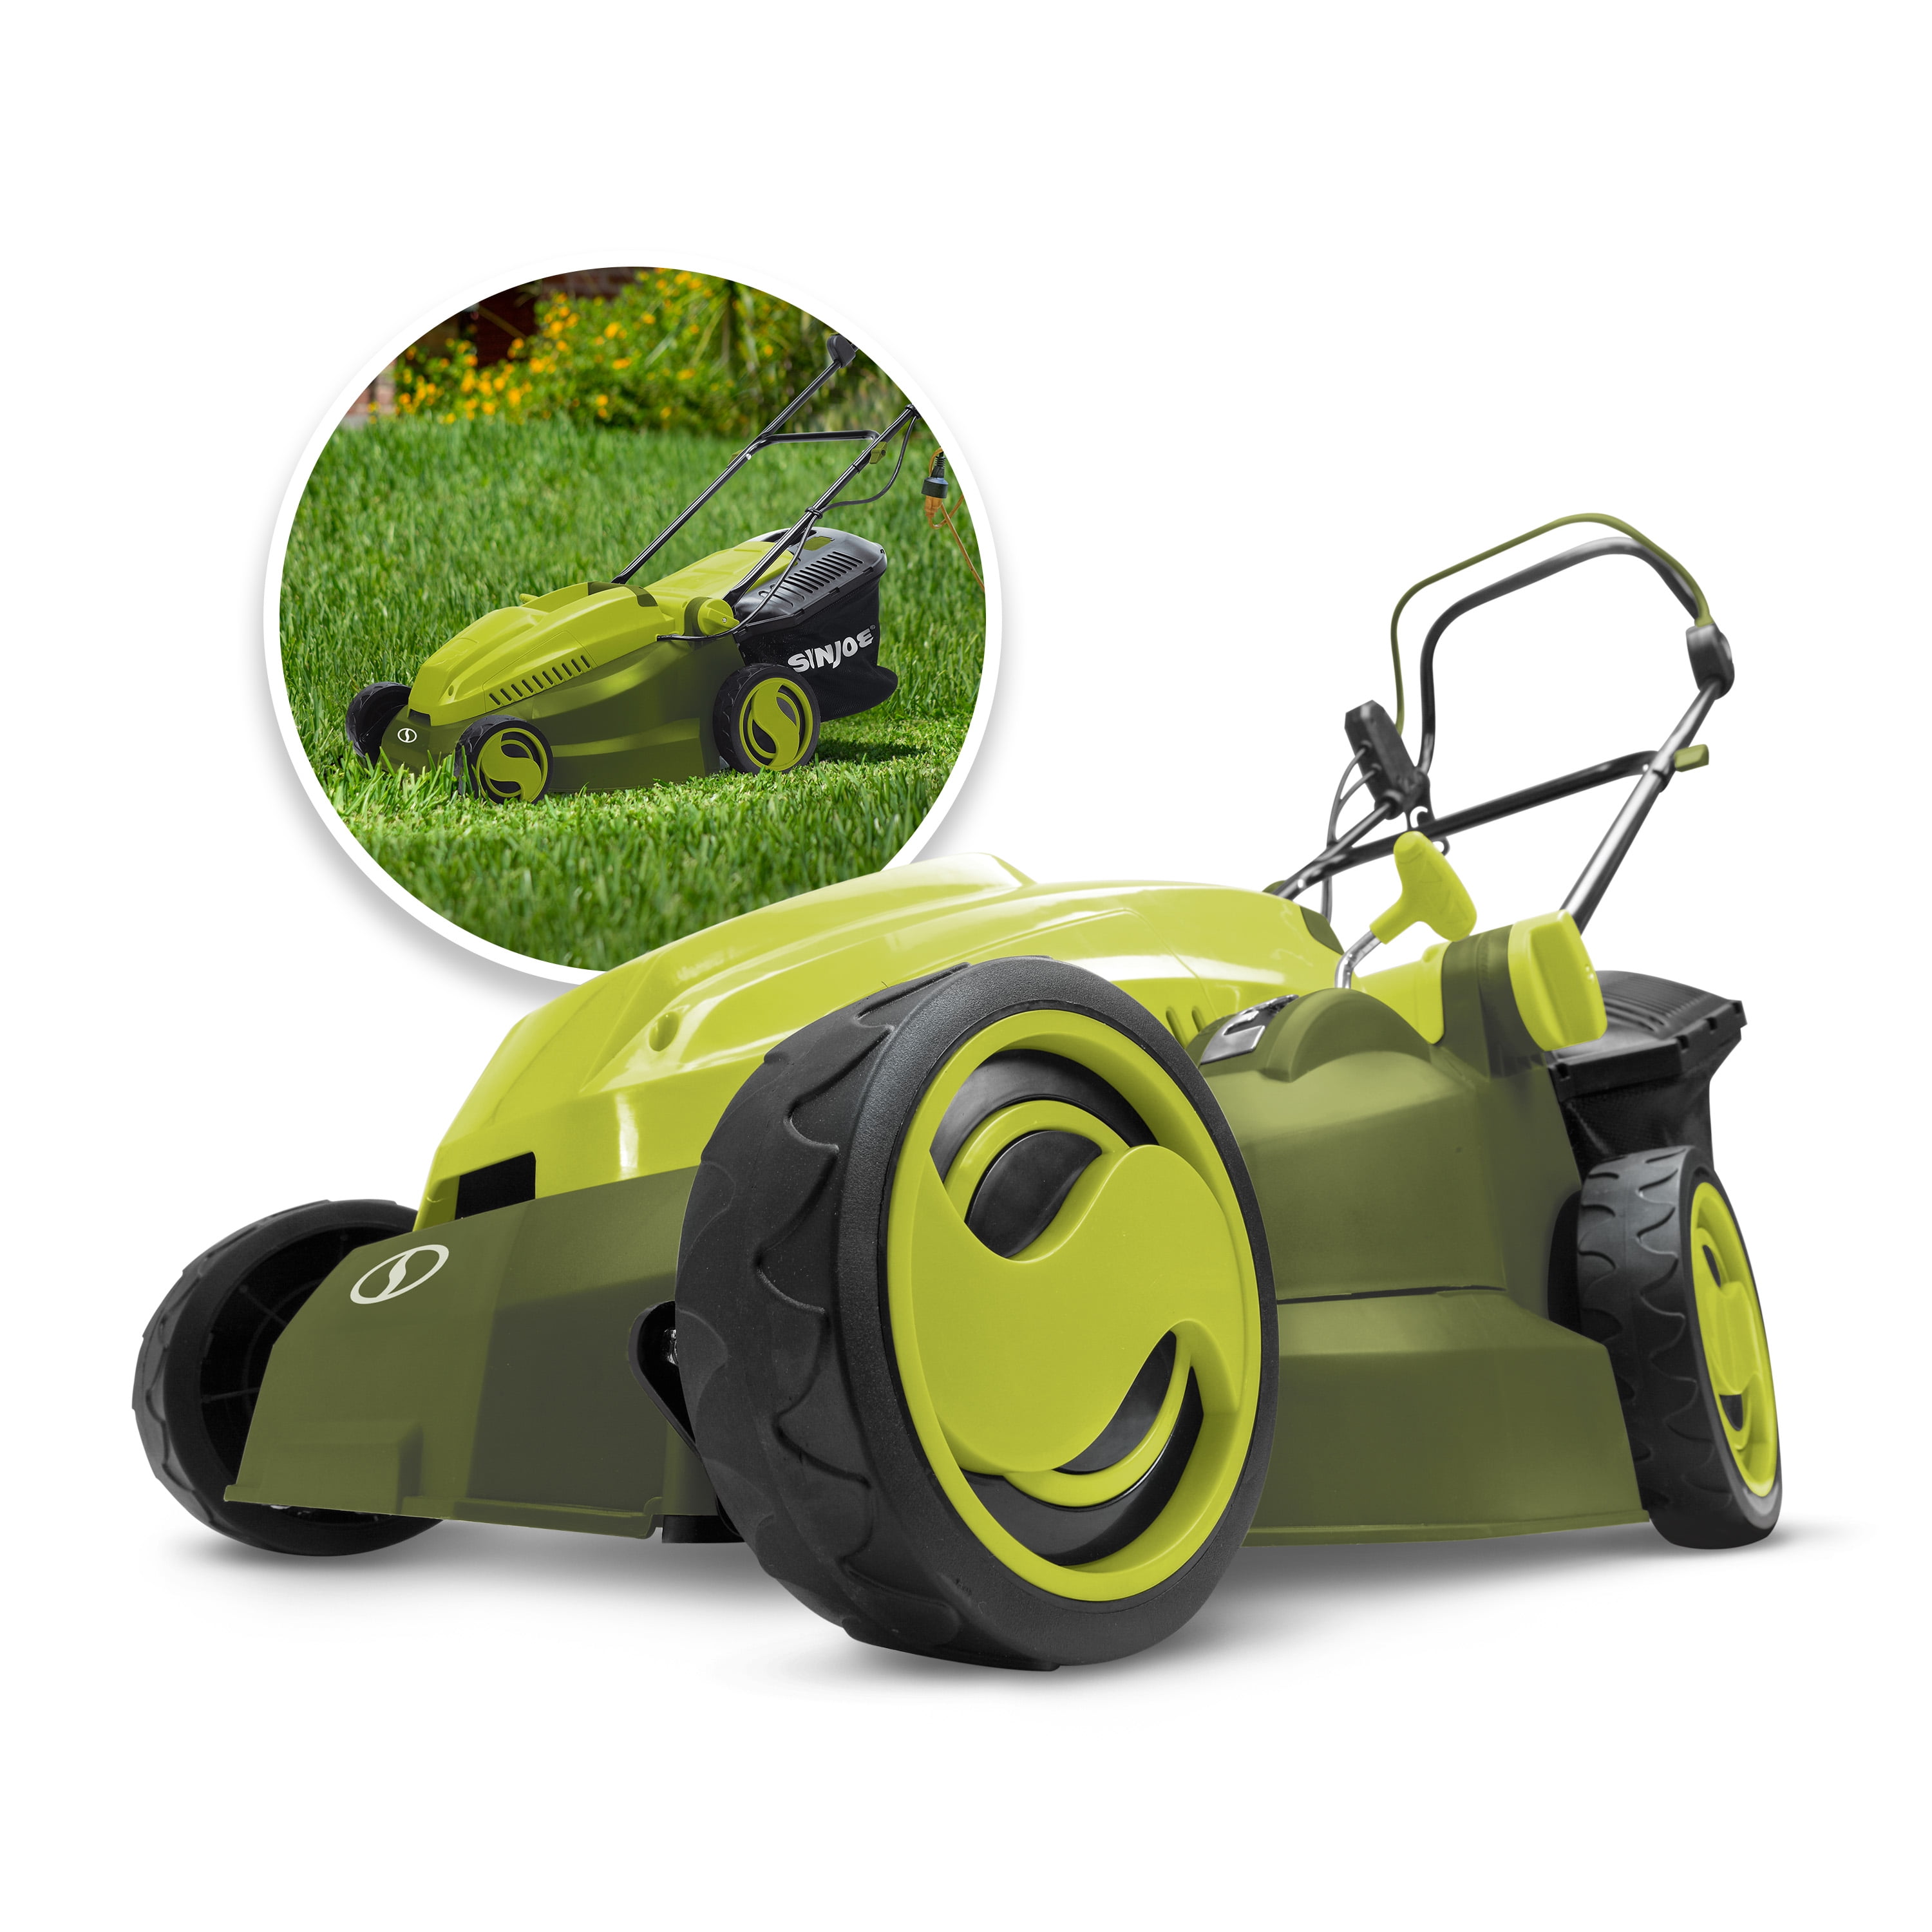 Earthwise GC91820-EW 18-Inch/20-Inch Reel Lawn Mower Grass Catcher, Black 